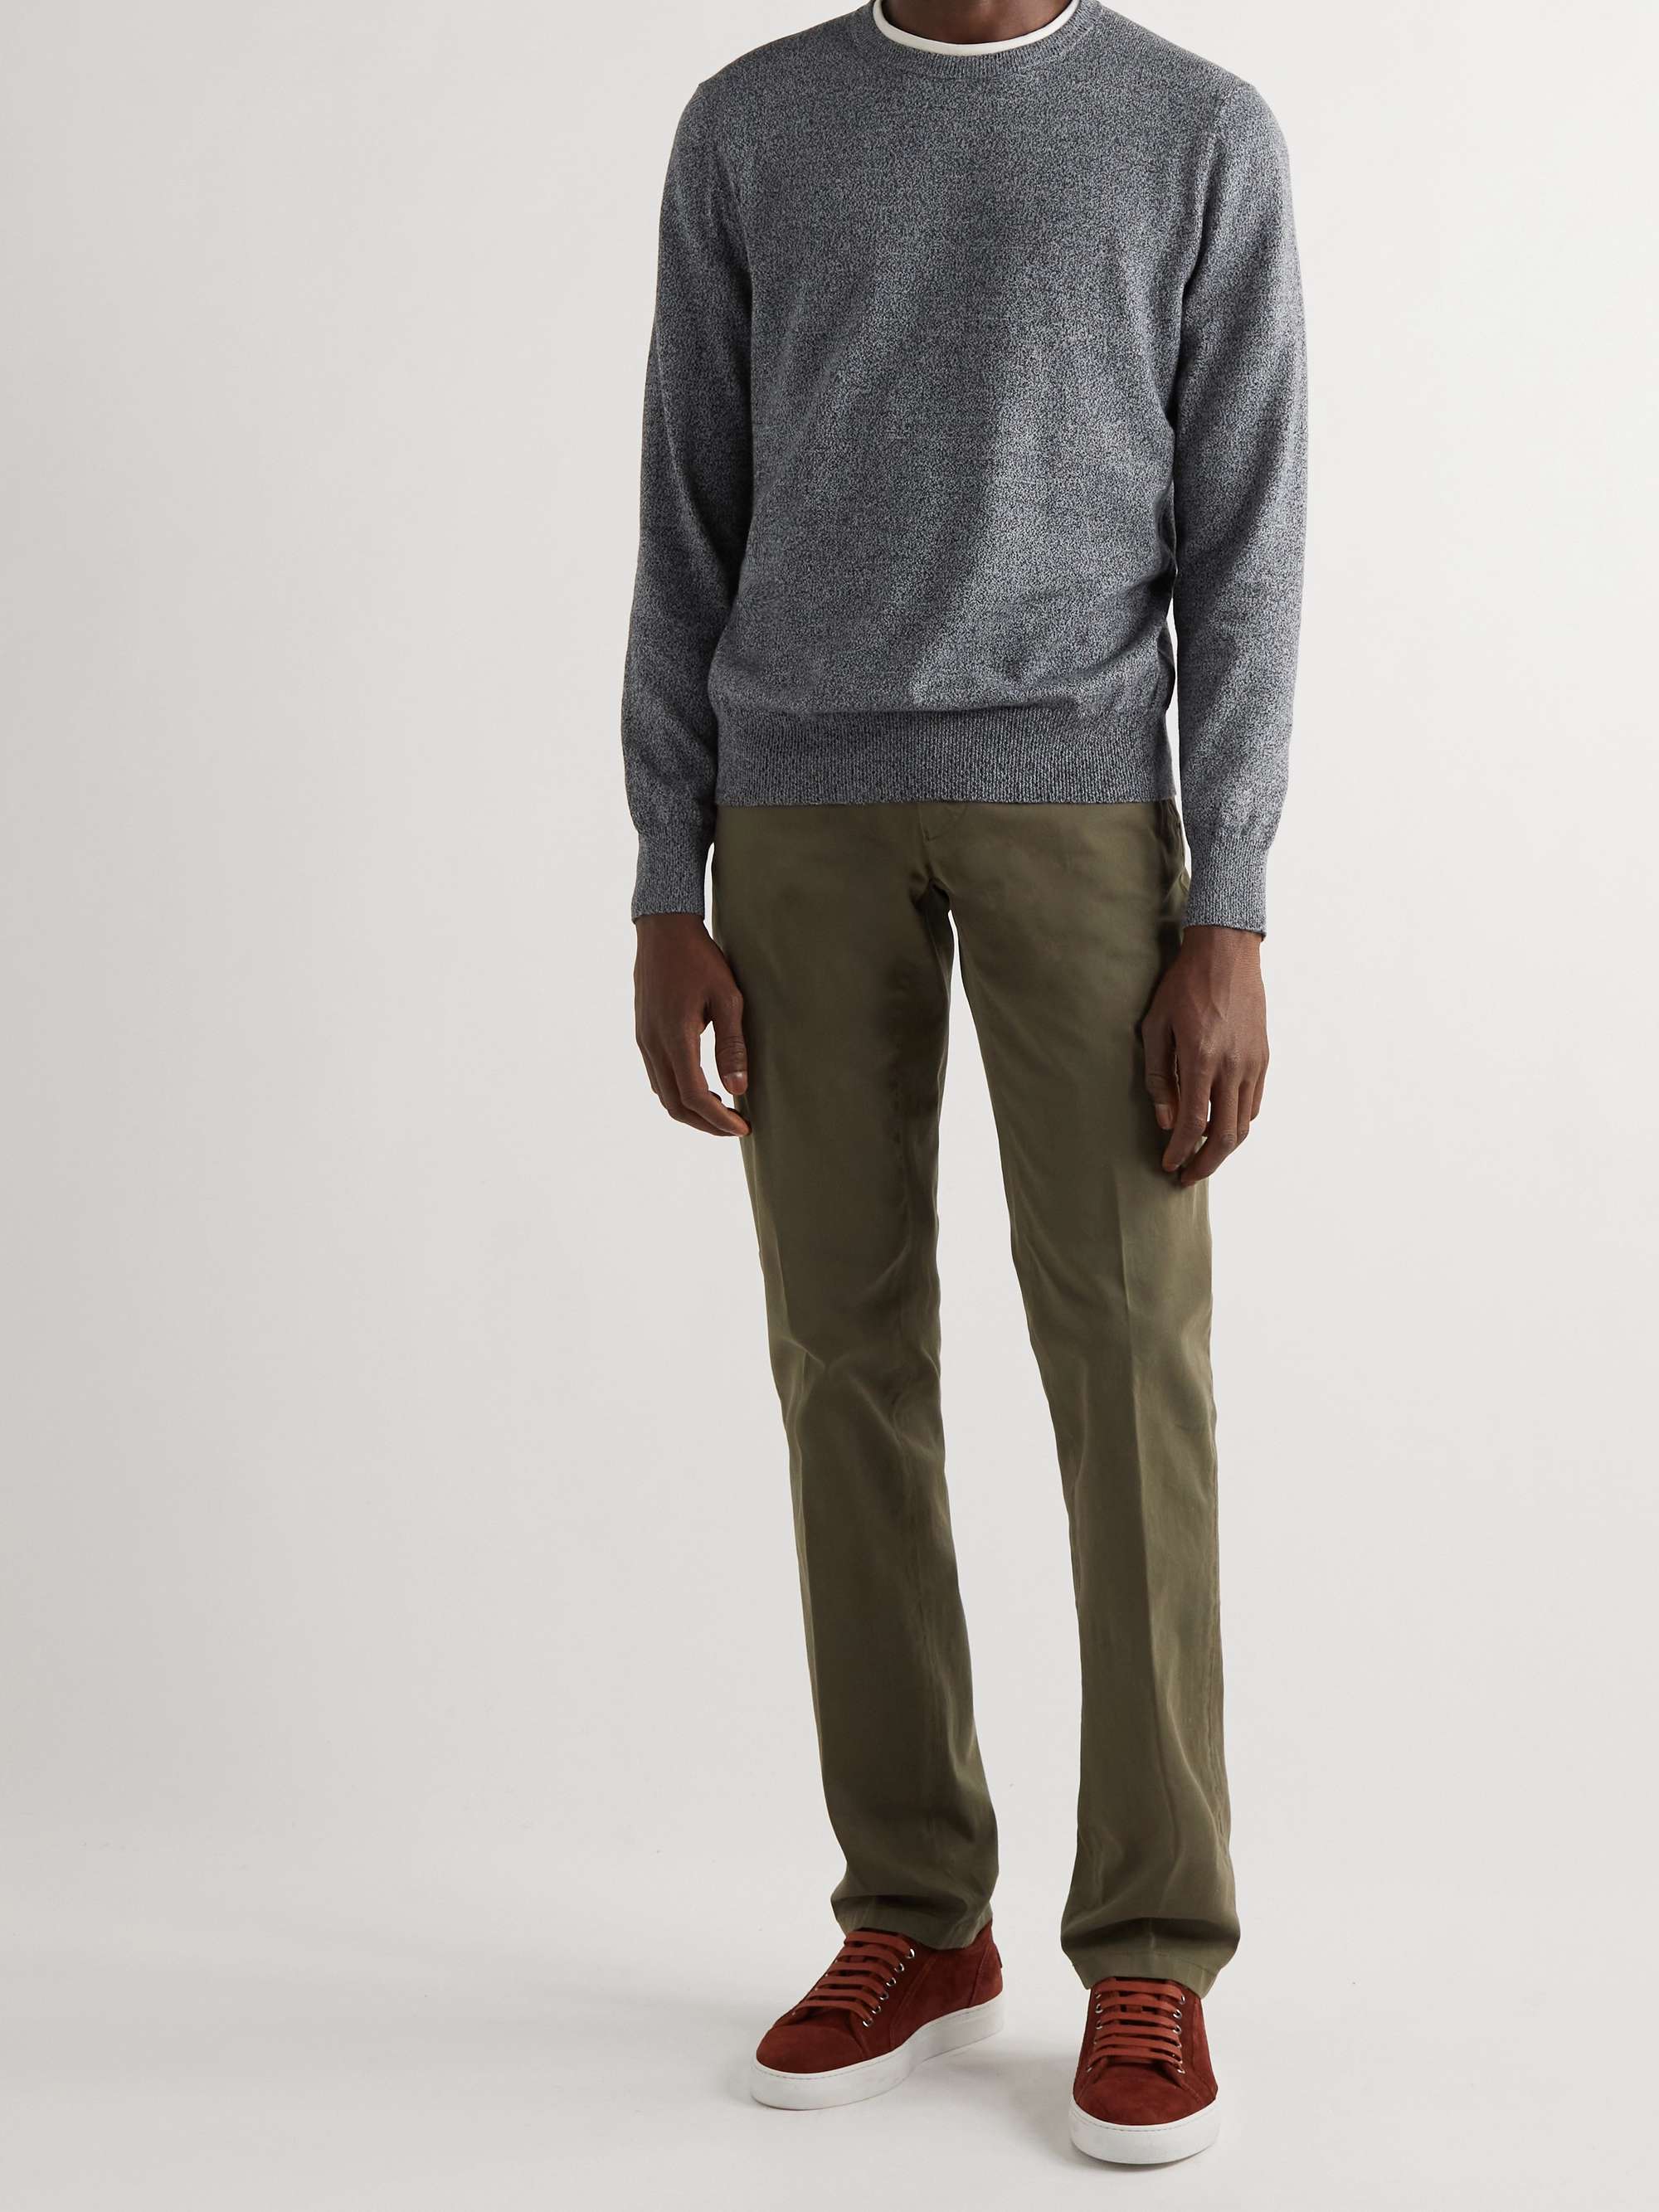 CANALI Cotton Sweater for Men | MR PORTER